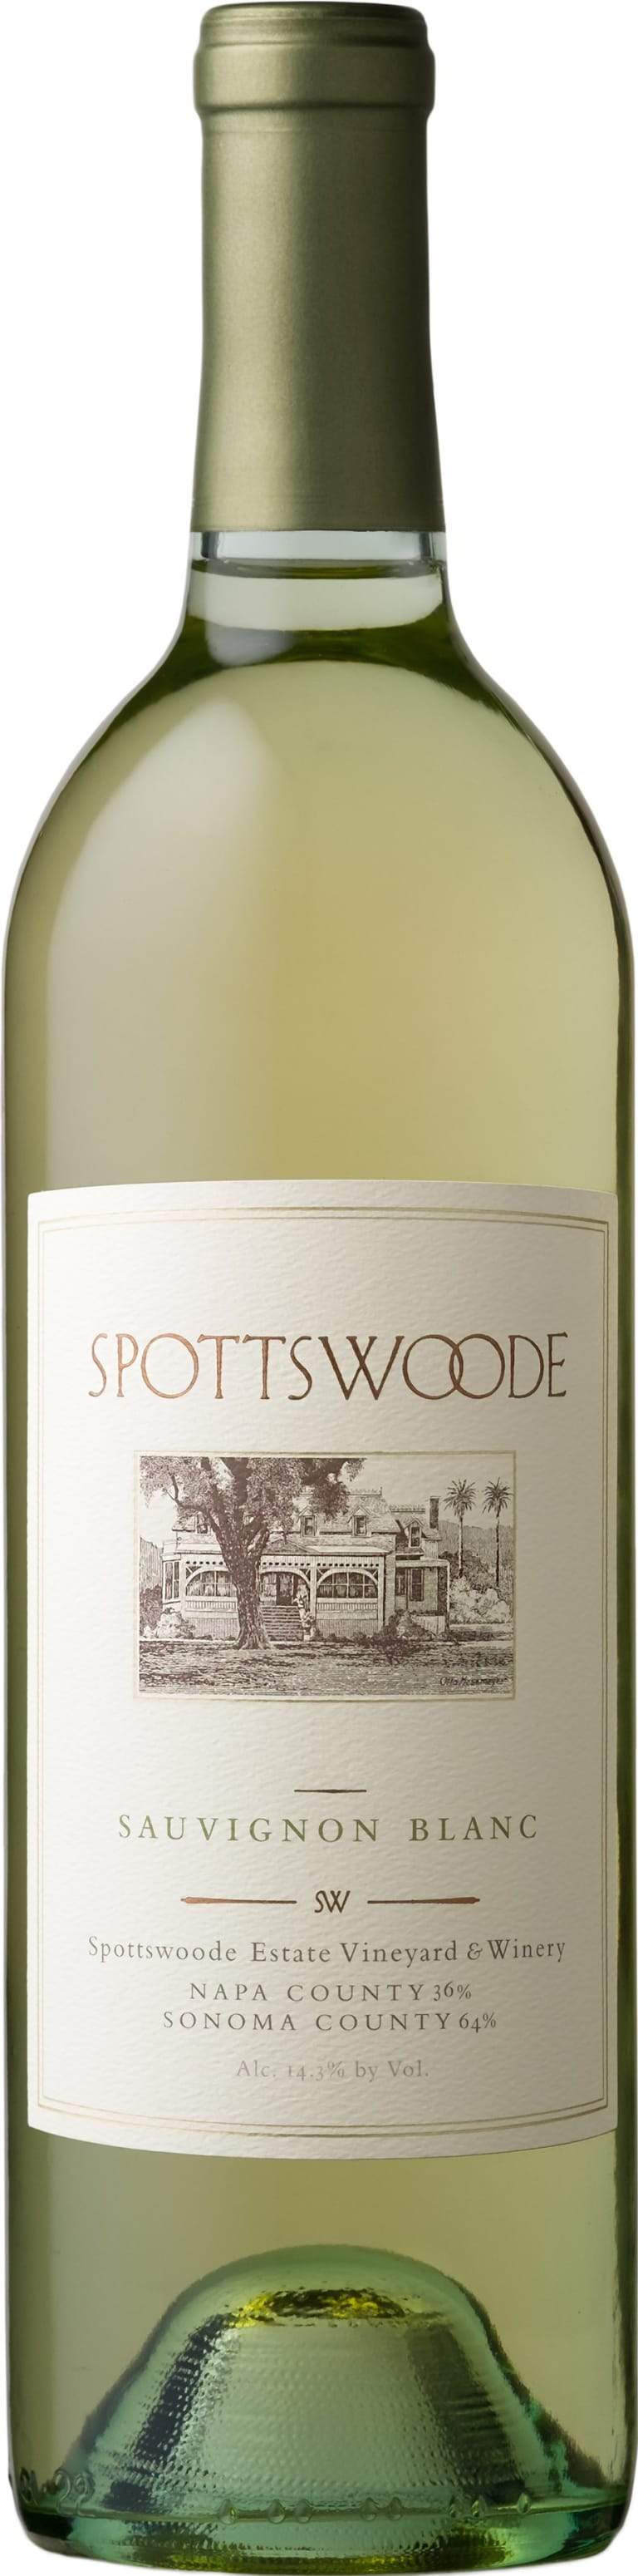 Spottswoode Sauvignon Blanc 2018